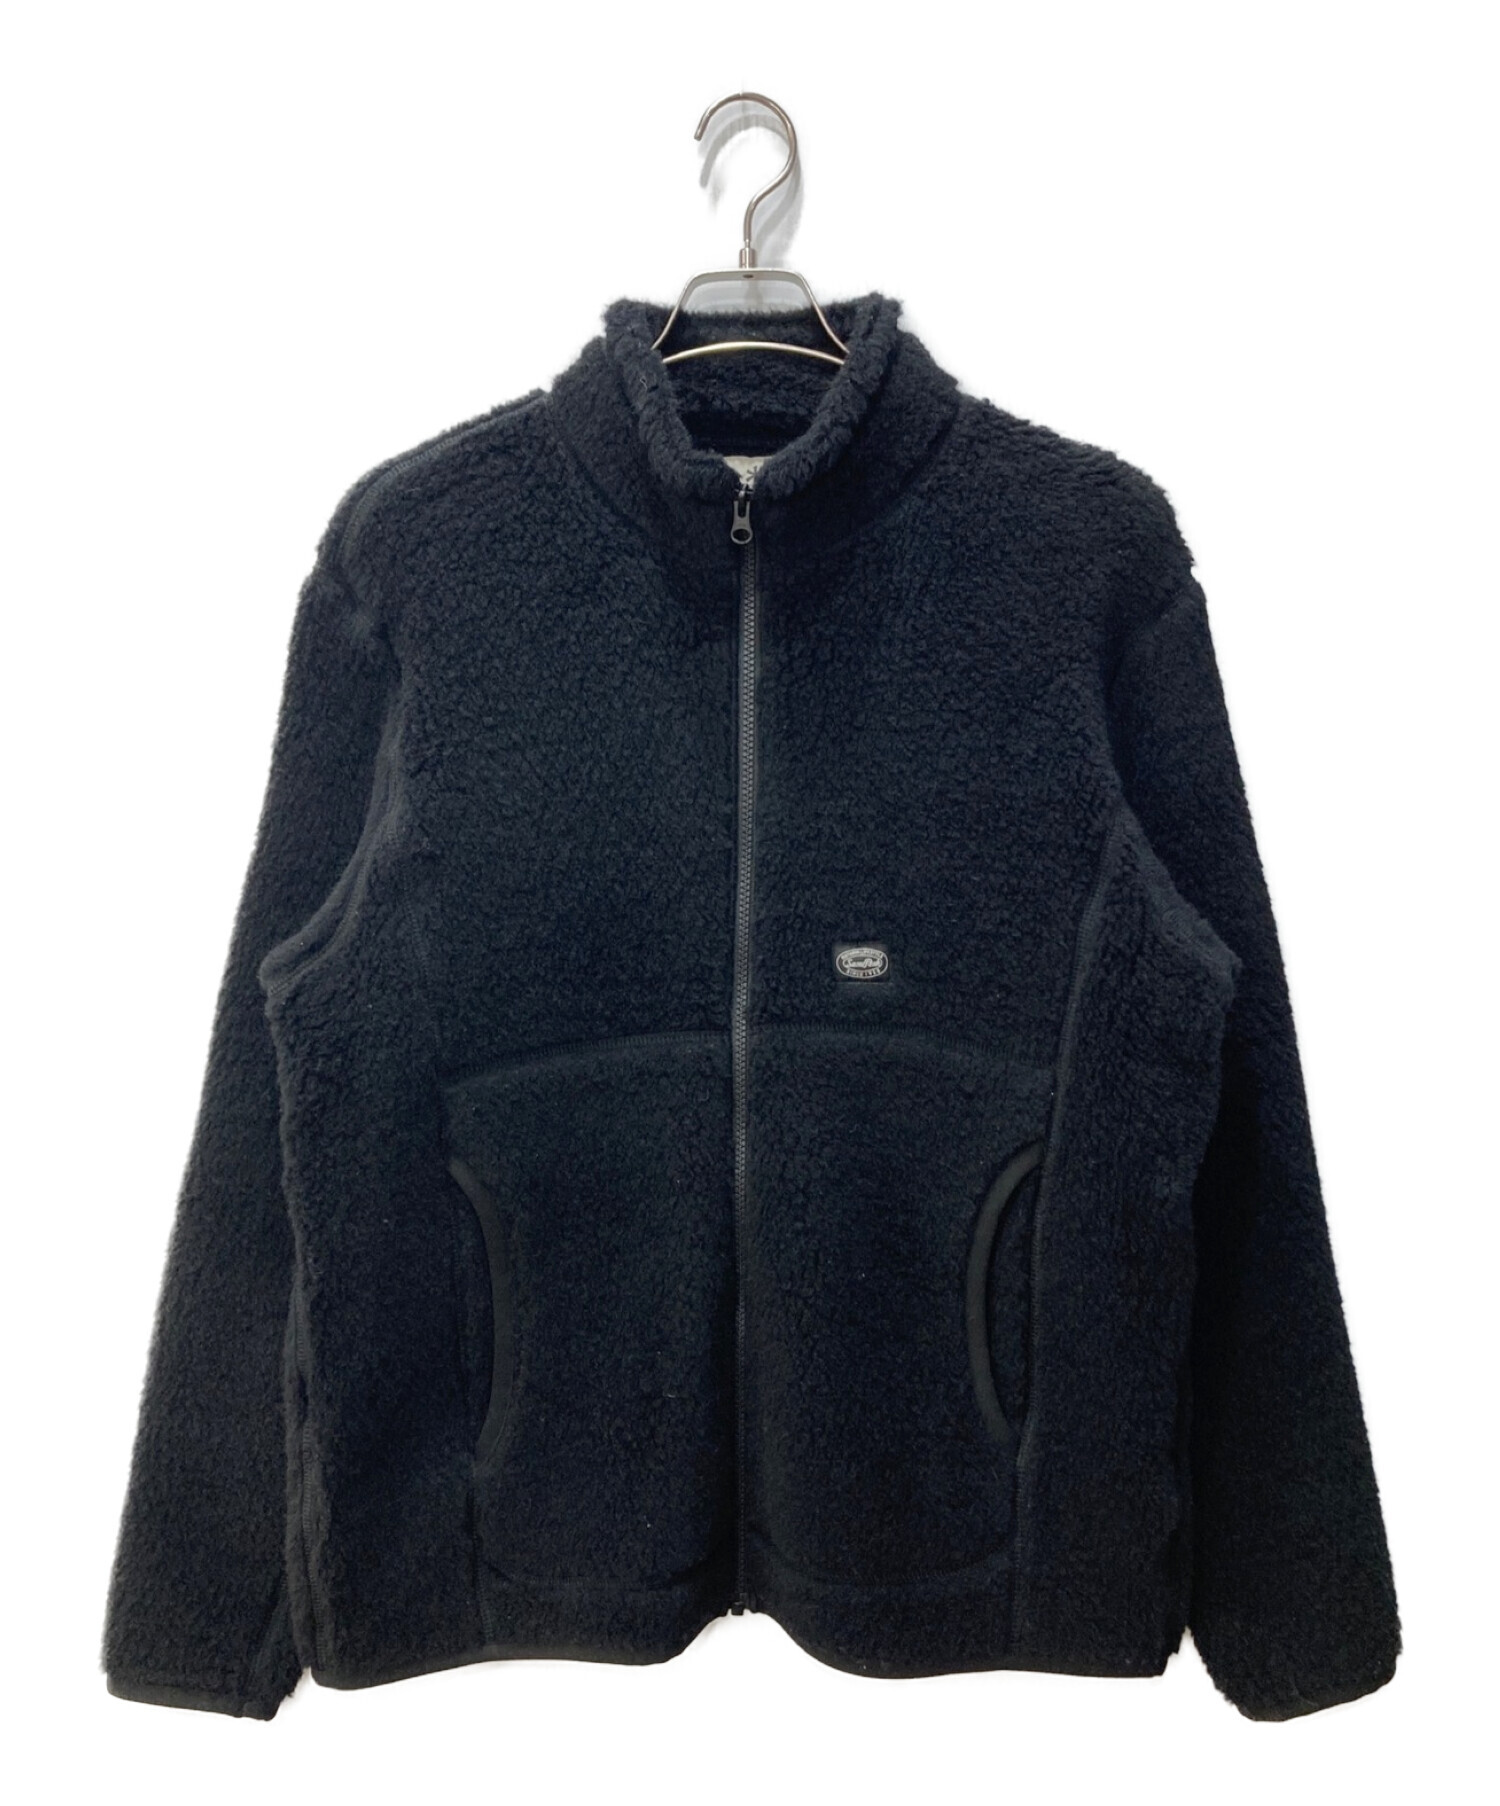 snow peak (スノーピーク) Wool Fleece Jacket ブラック サイズ:M